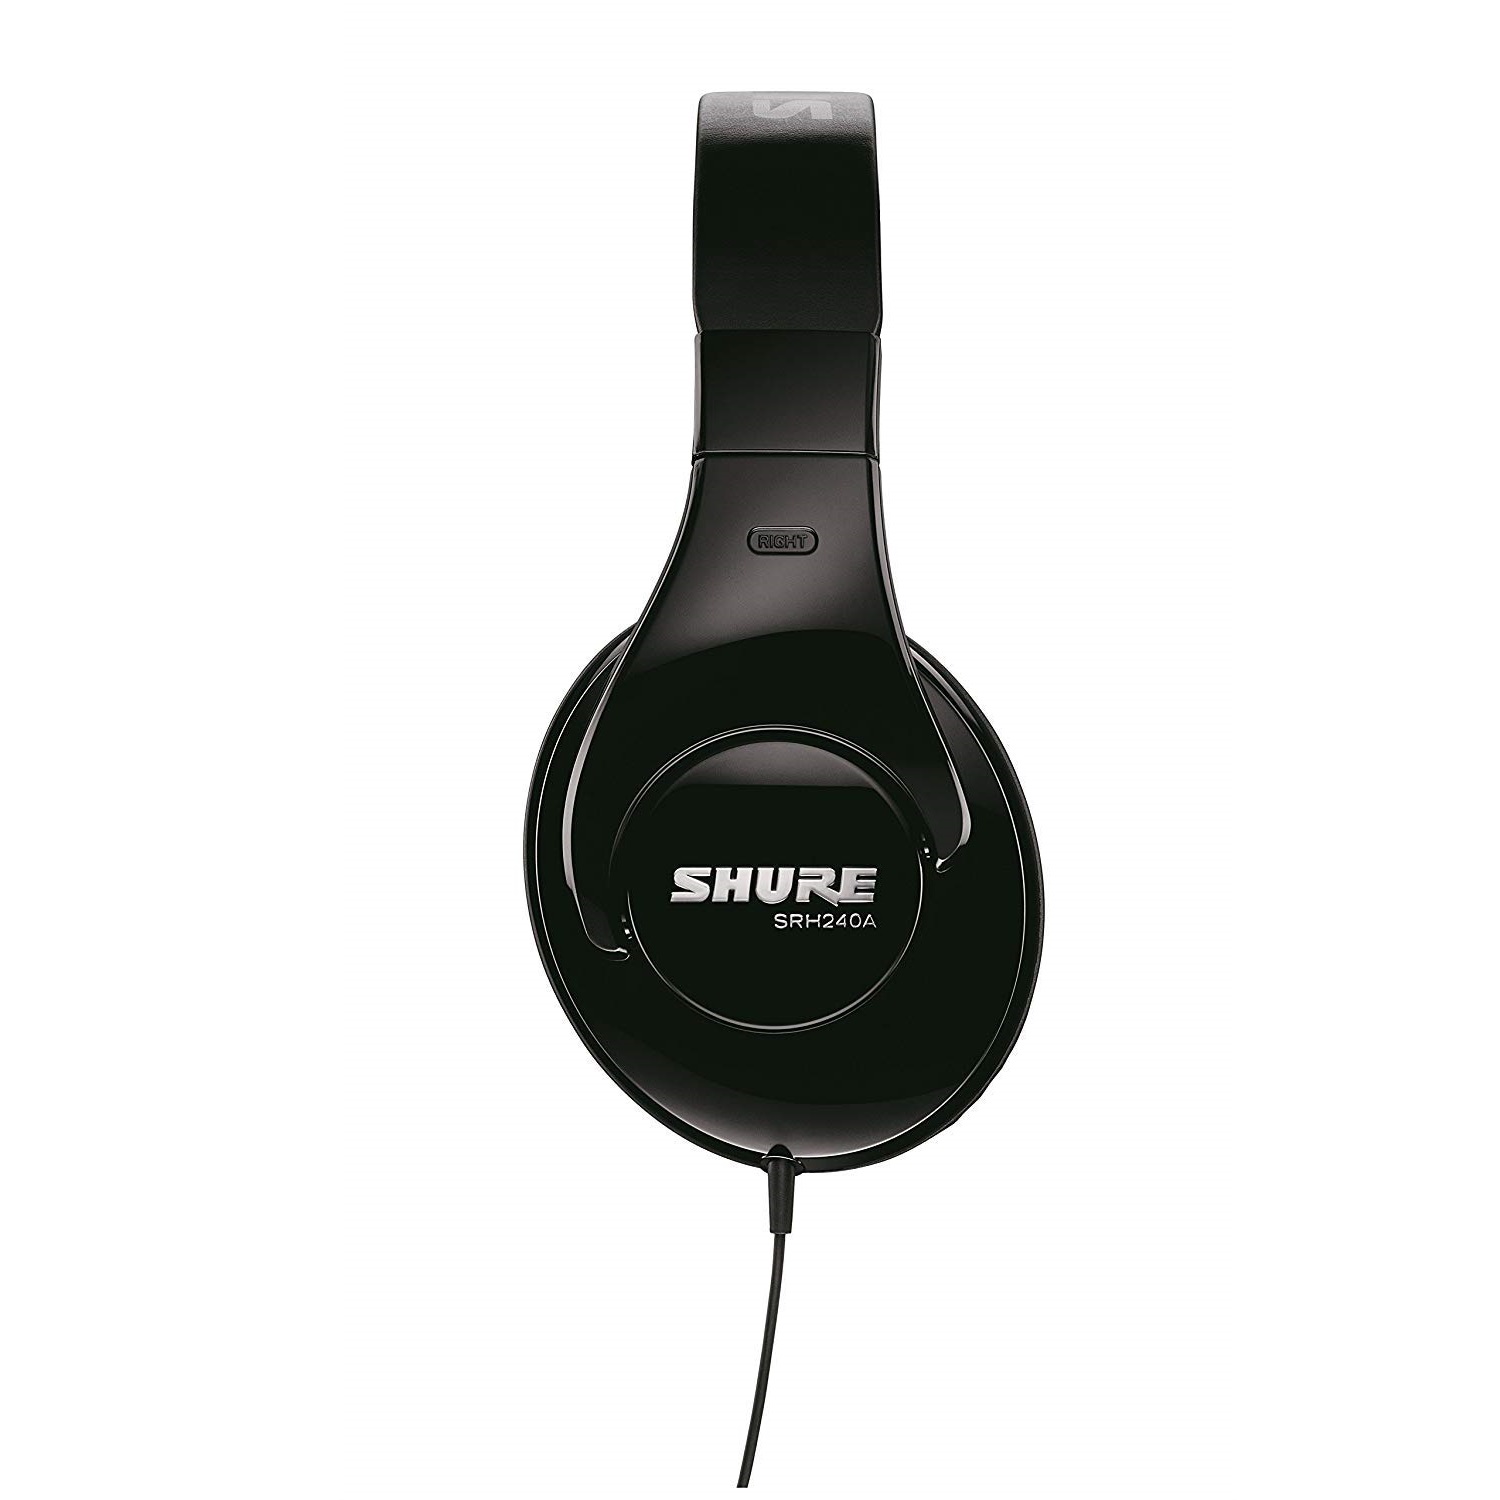 Shure SRH240A Professional Stereo Headphones